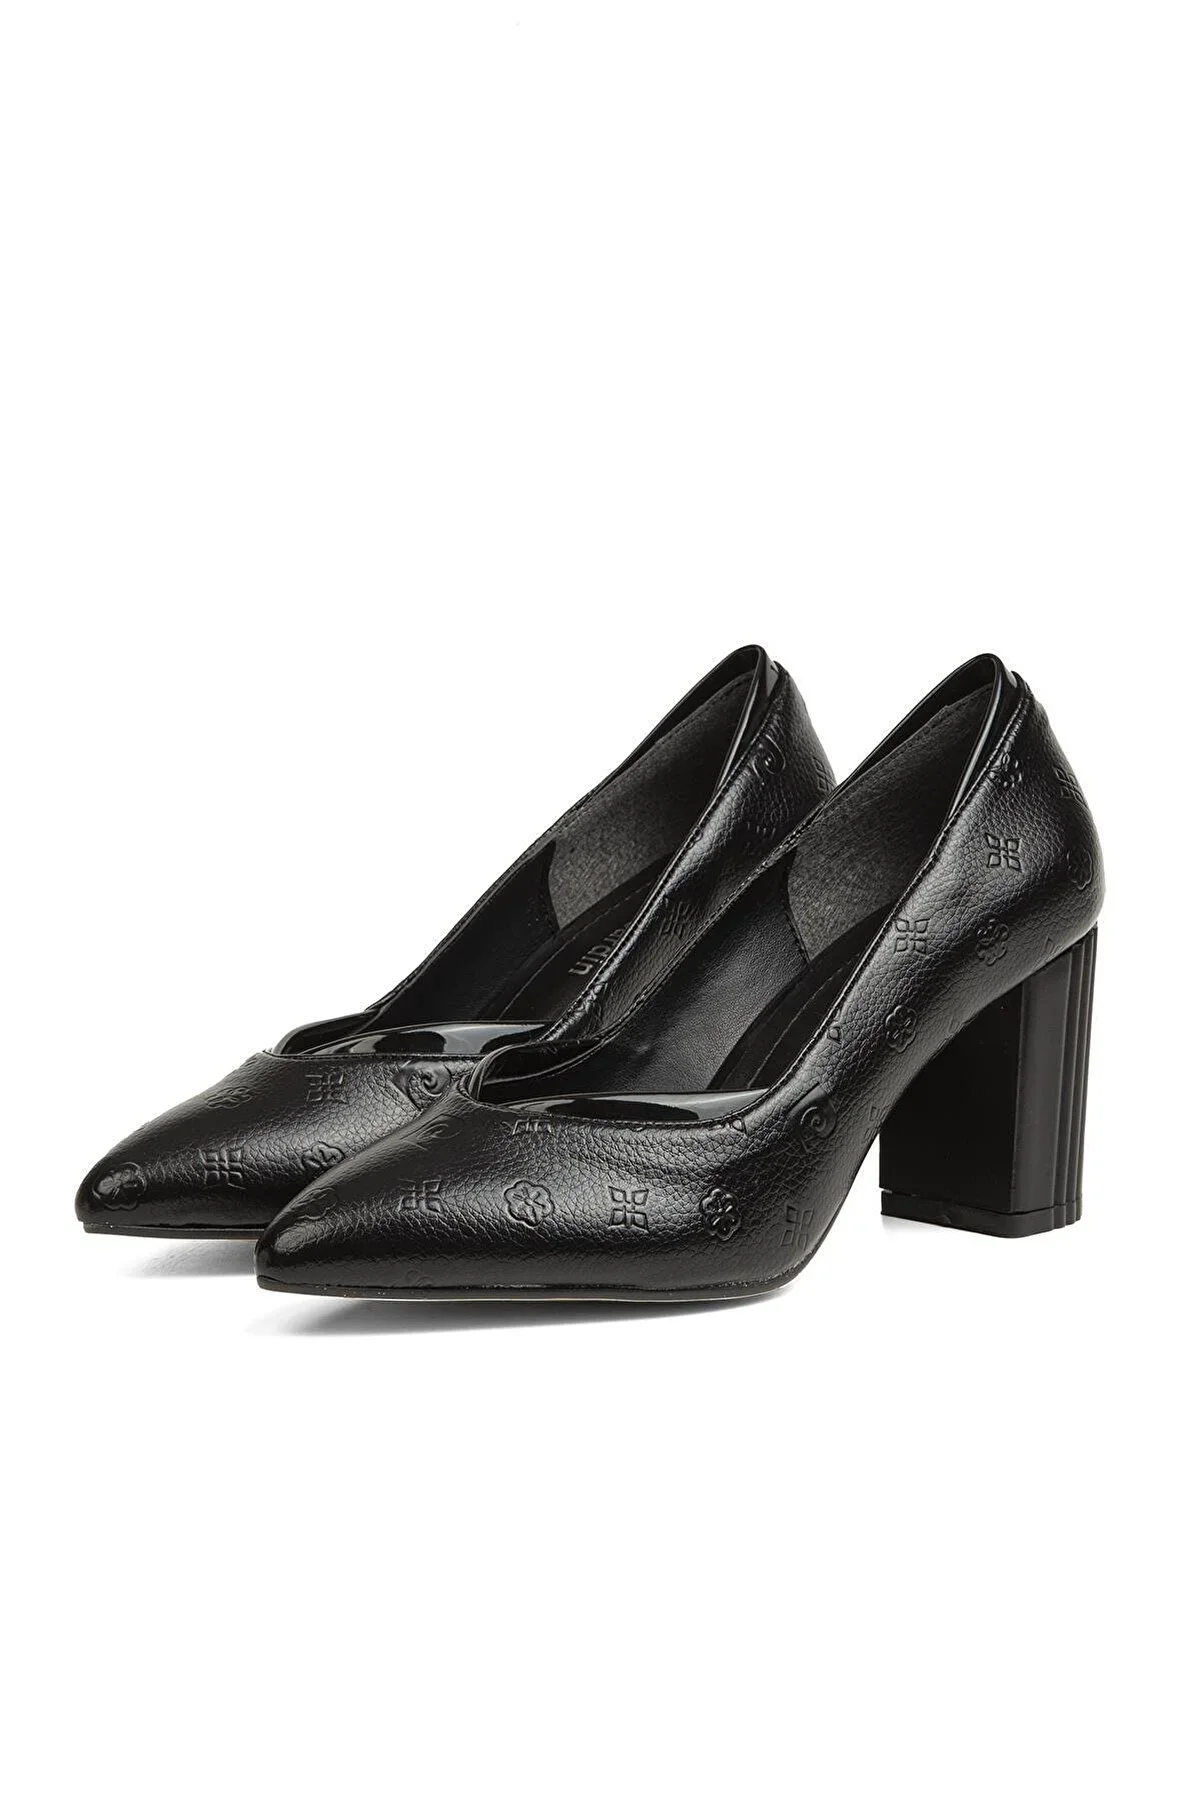 Kadın Topuklu Ayakkabı PC-51199-Siyah - 3